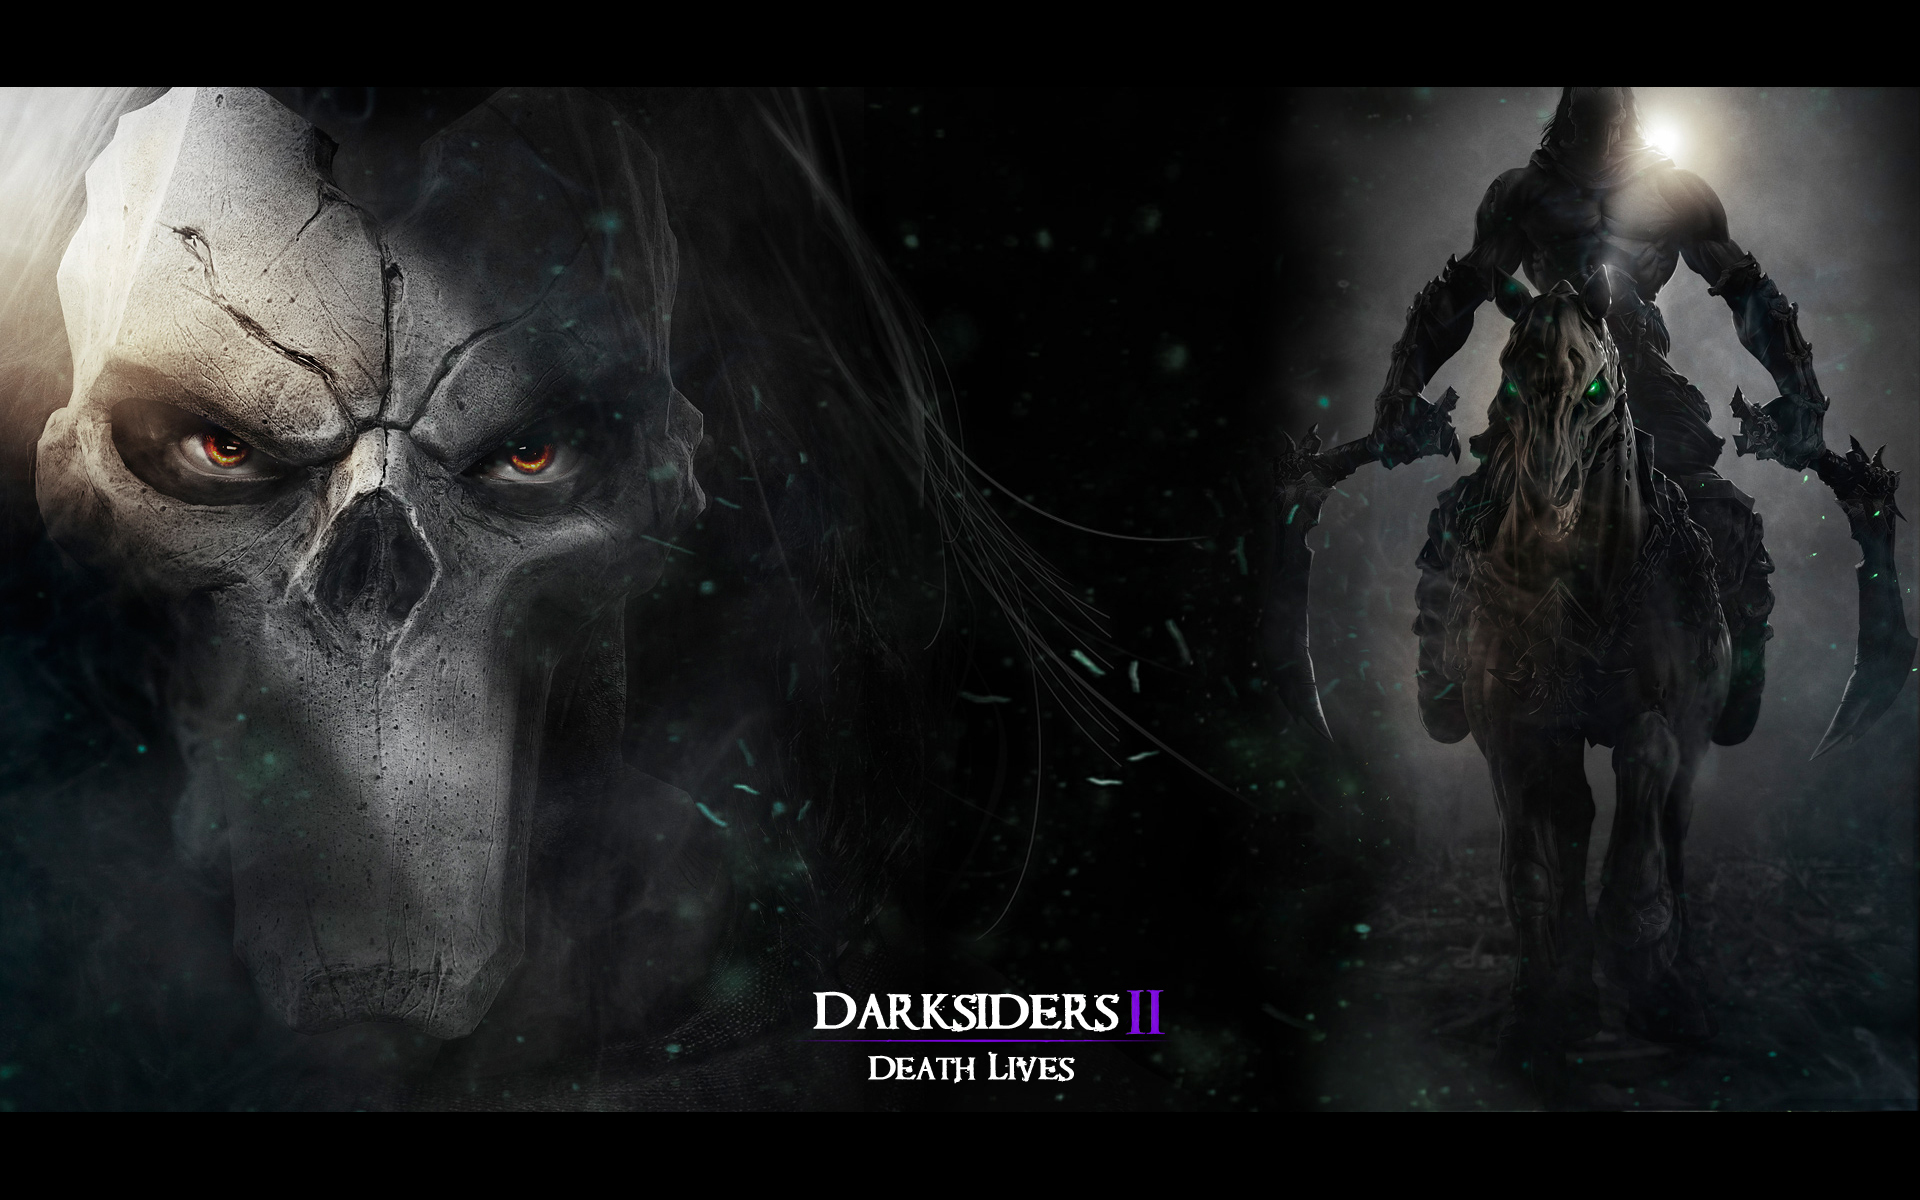 Video Game Darksiders II HD Wallpaper | Background Image